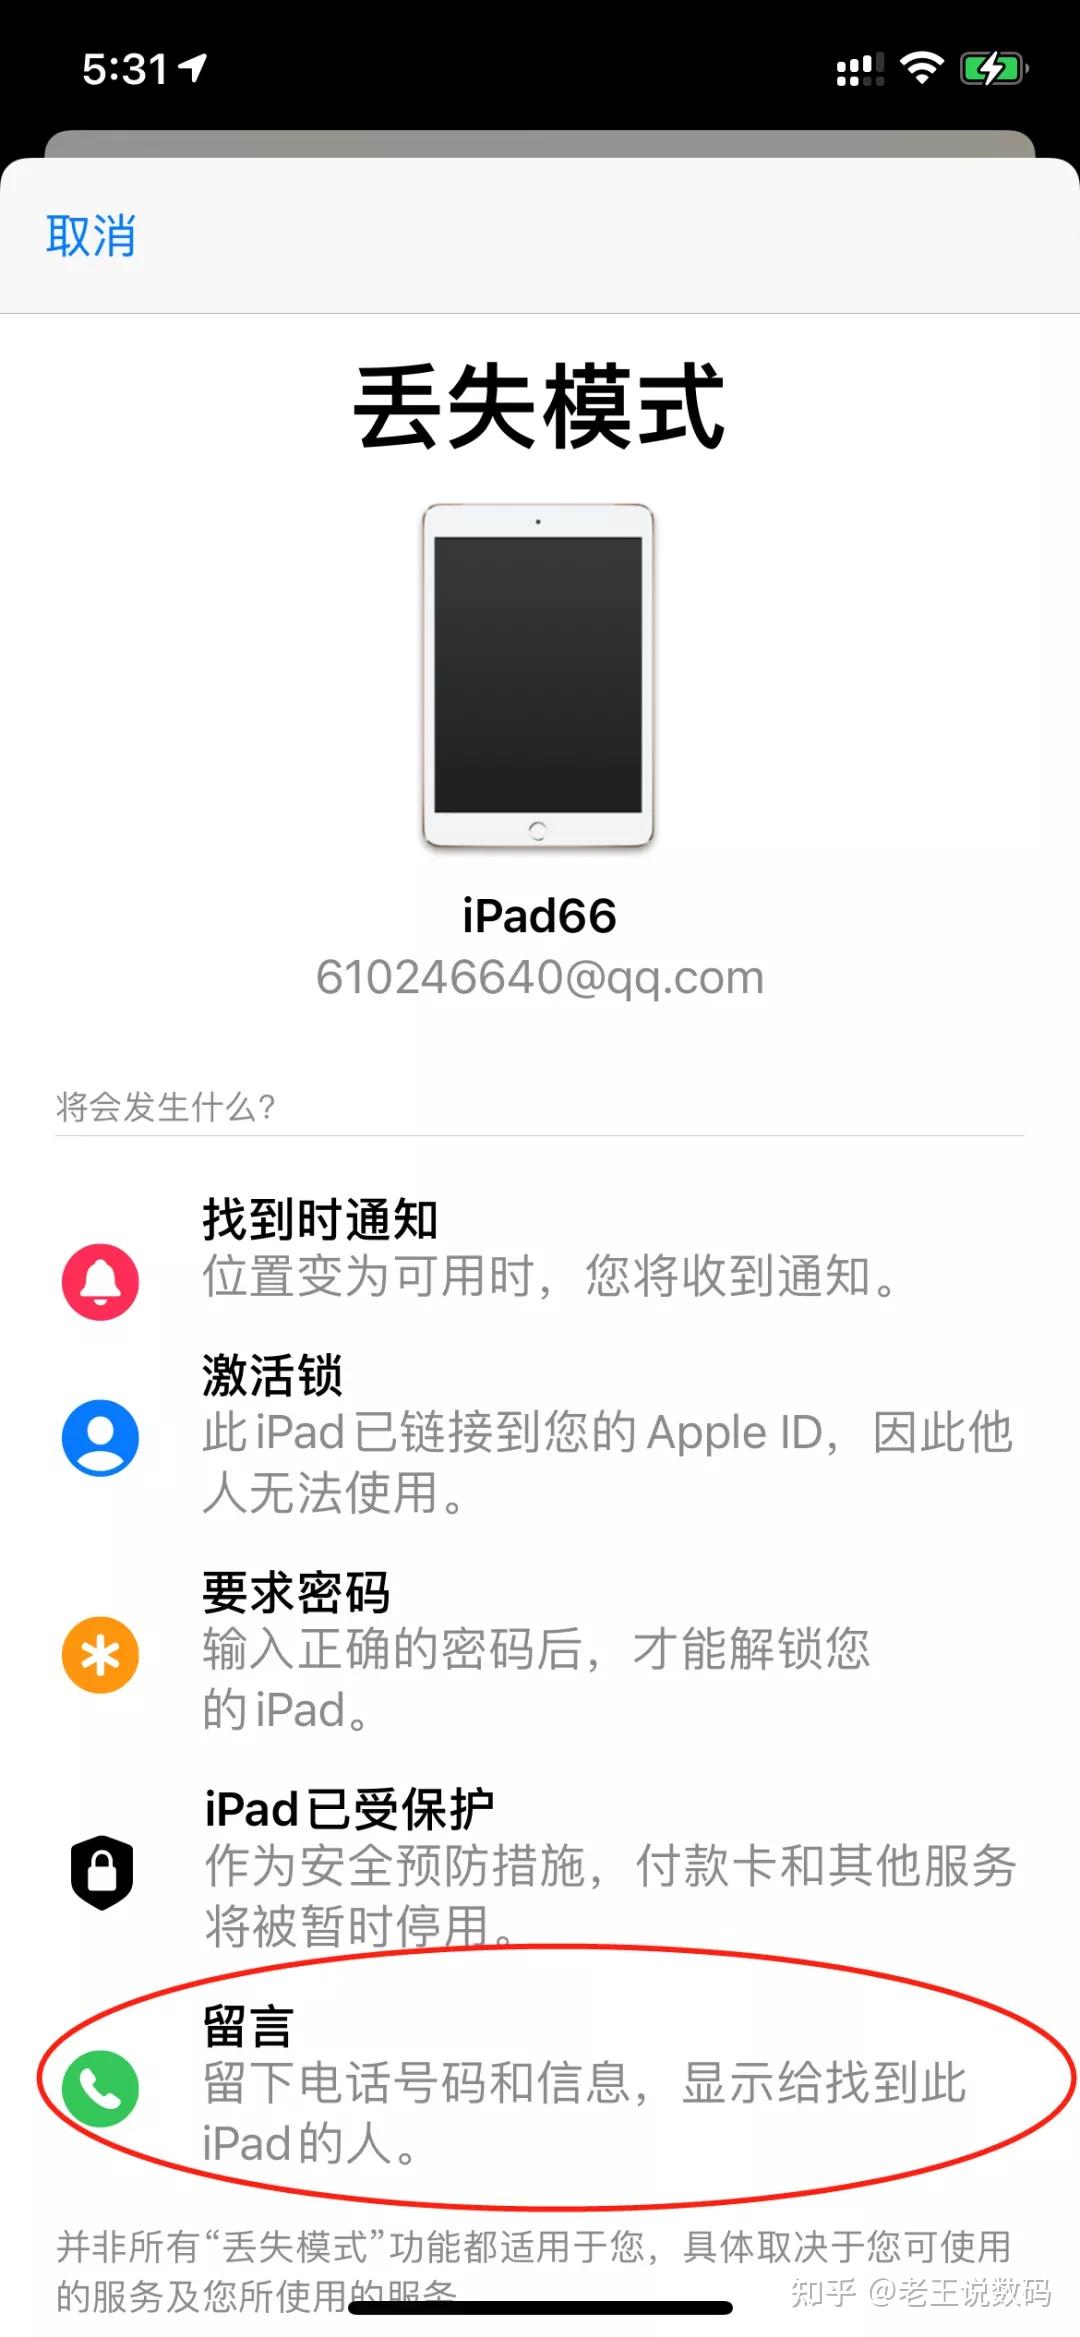 iOS漏洞可导致Apple ID被盗 – iOS 9修复三处安全漏洞-阿里云开发者社区